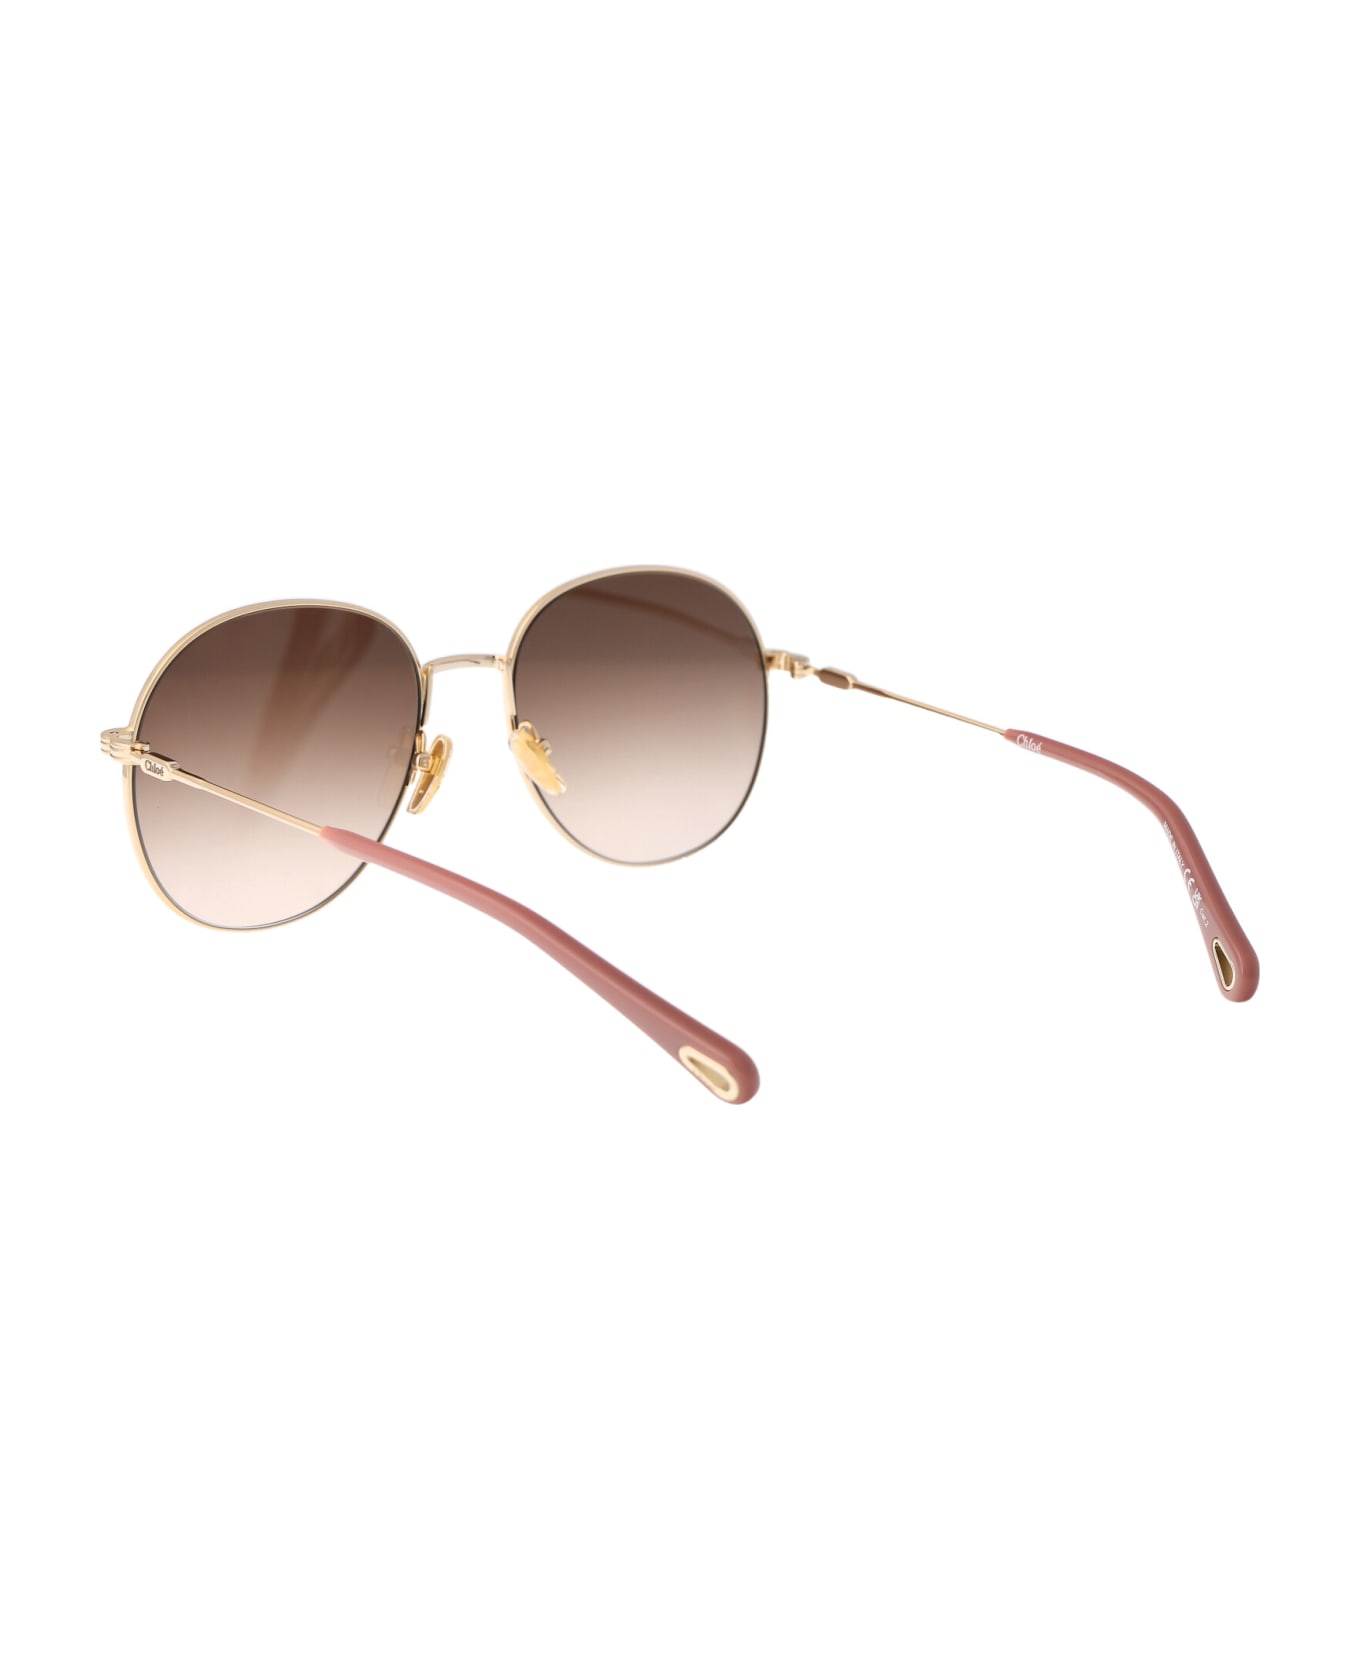 Chloé Eyewear Ch0178s Sunglasses - 002 GOLD GOLD BROWN サングラス